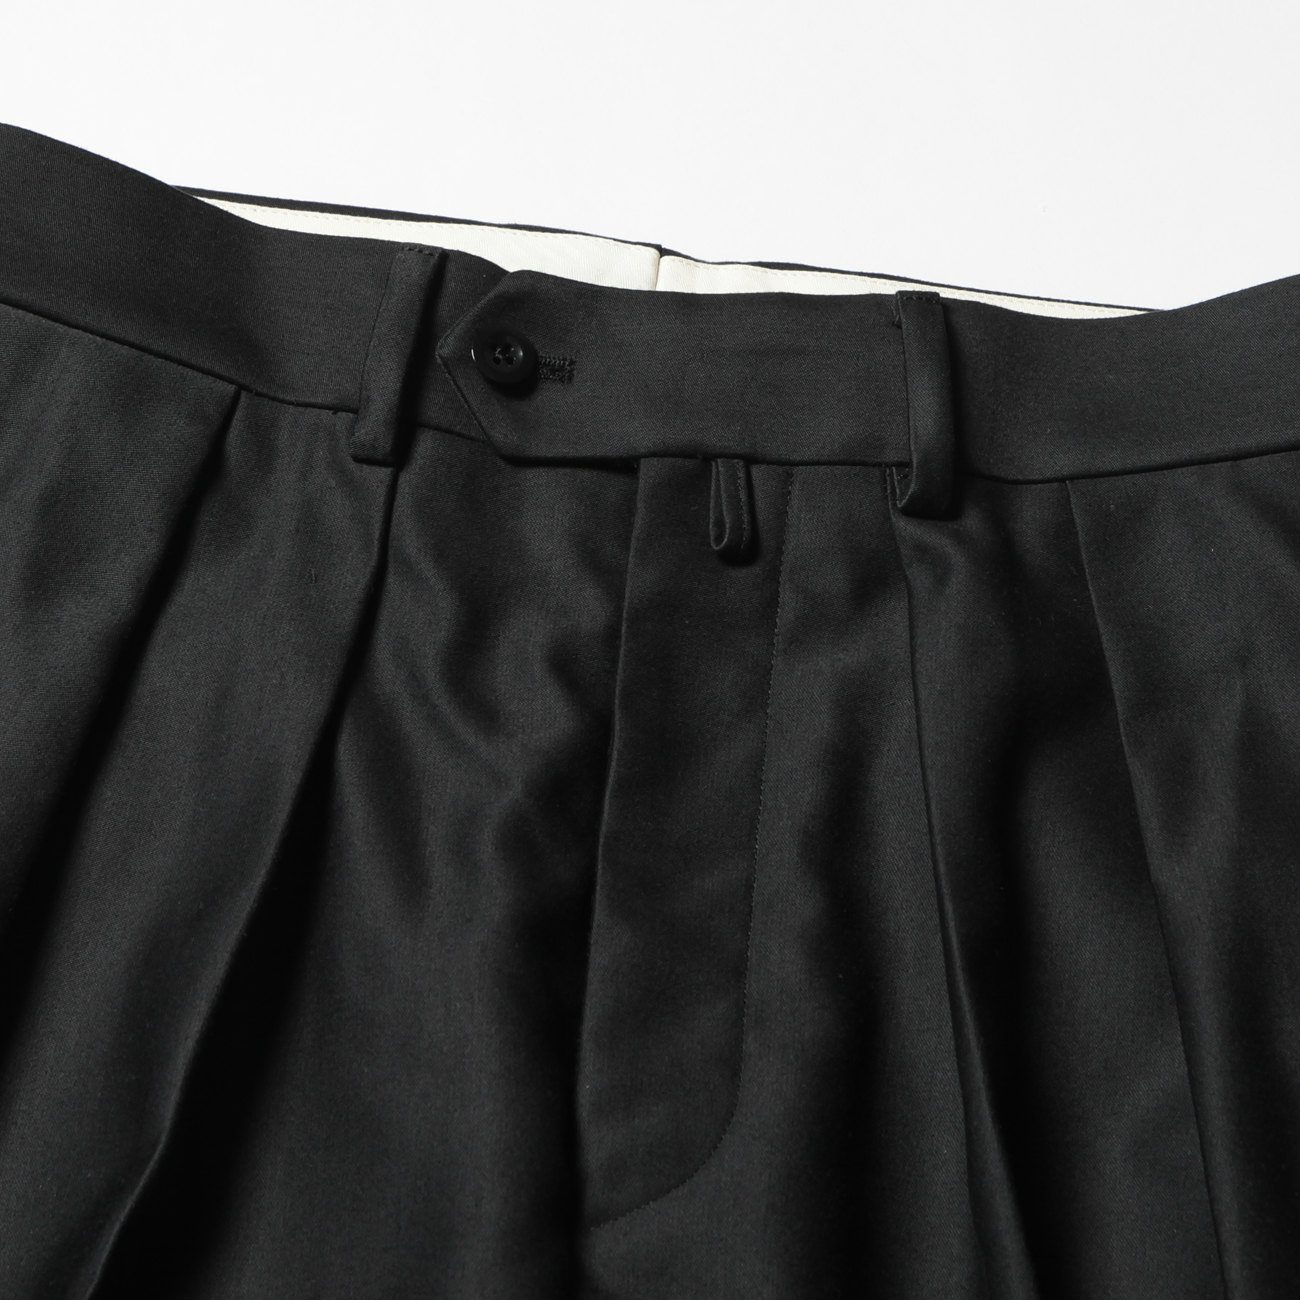 WRAPPER CLOTH / Standard - Black